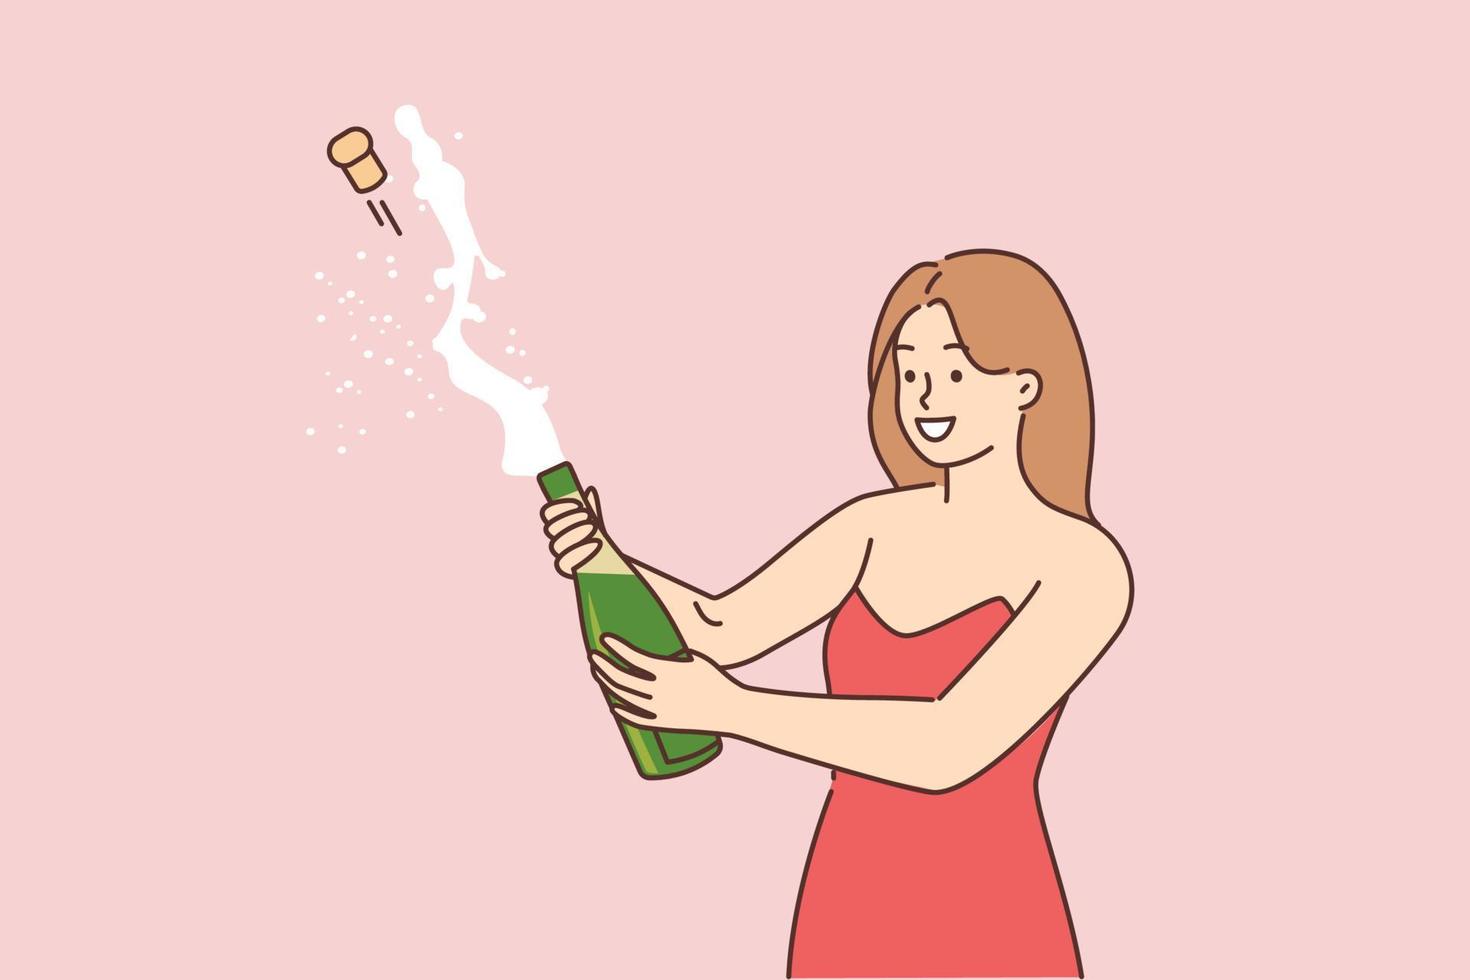 celebracion concepto. joven niña apertura un botella de champán y teniendo divertida. abrió champán rociado, plano editable vector ilustración